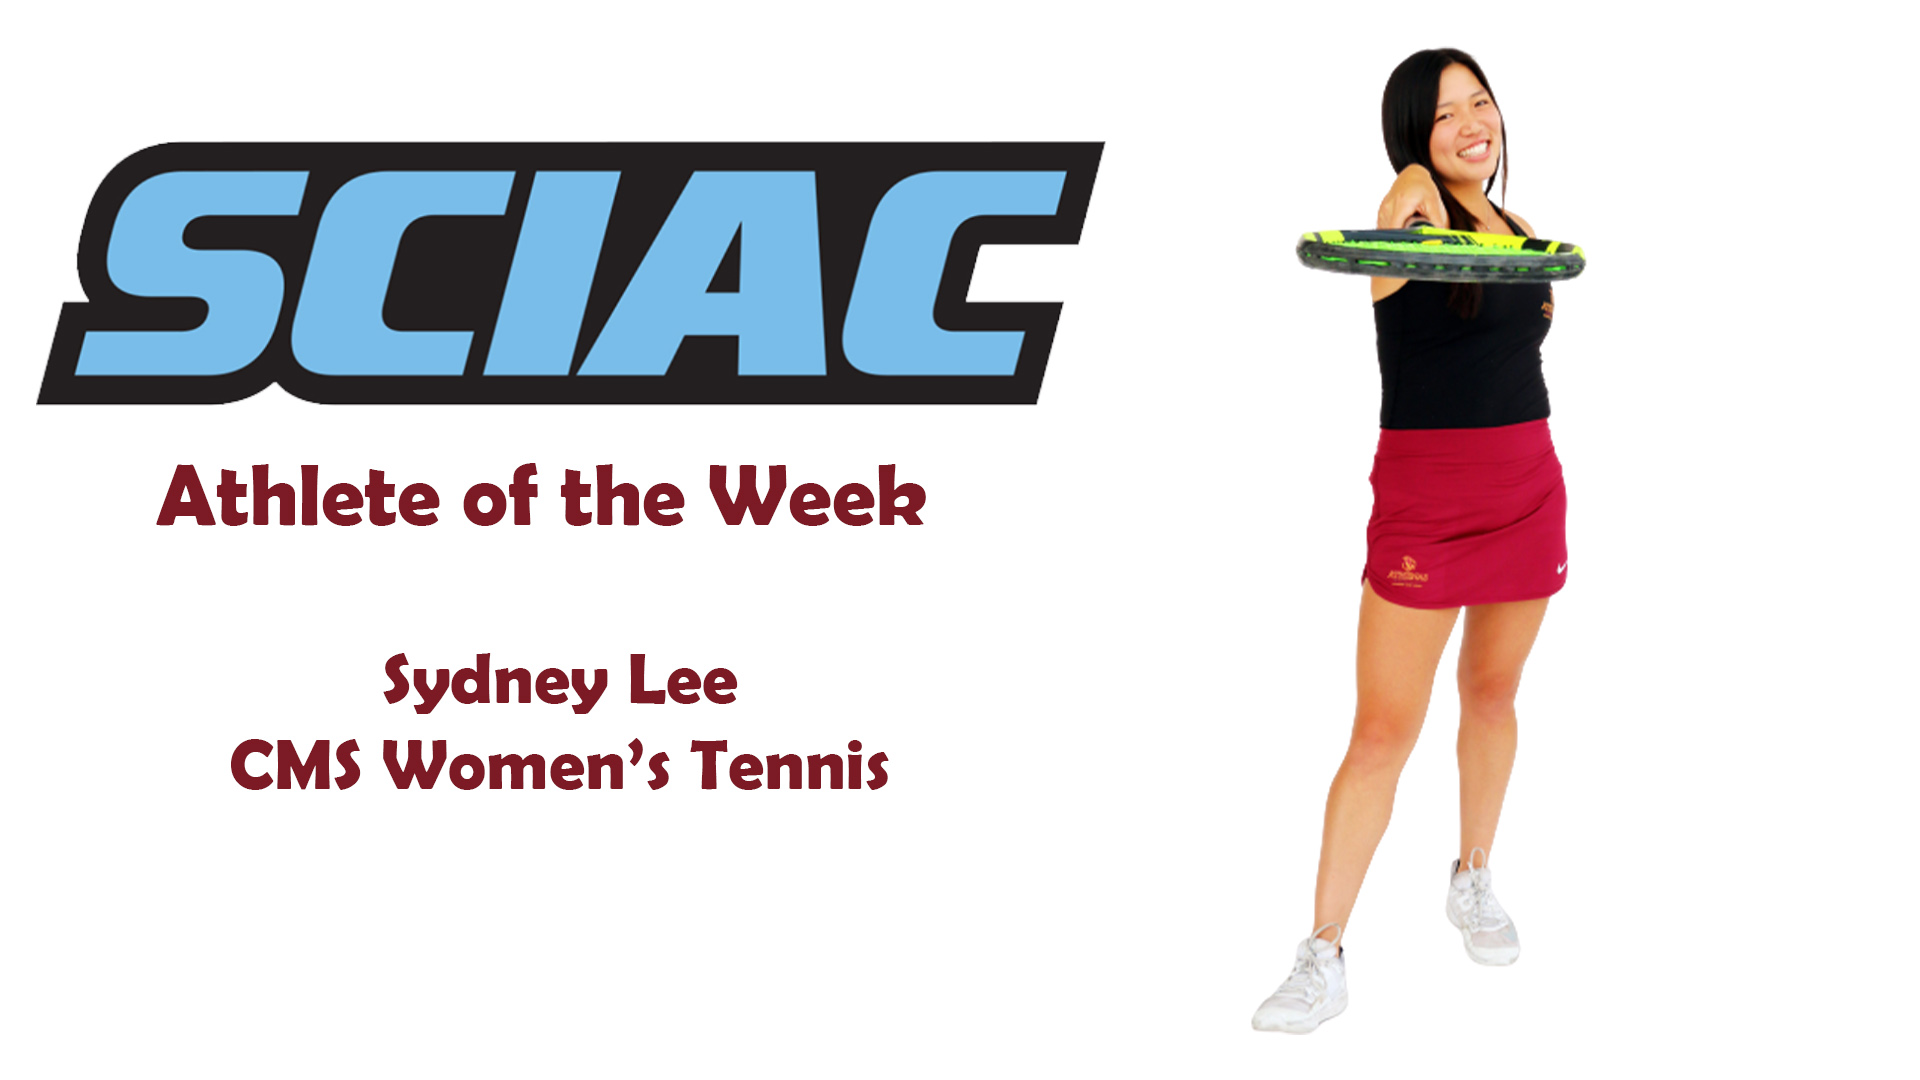 Sydney Lee posed shot with SCIAC logo